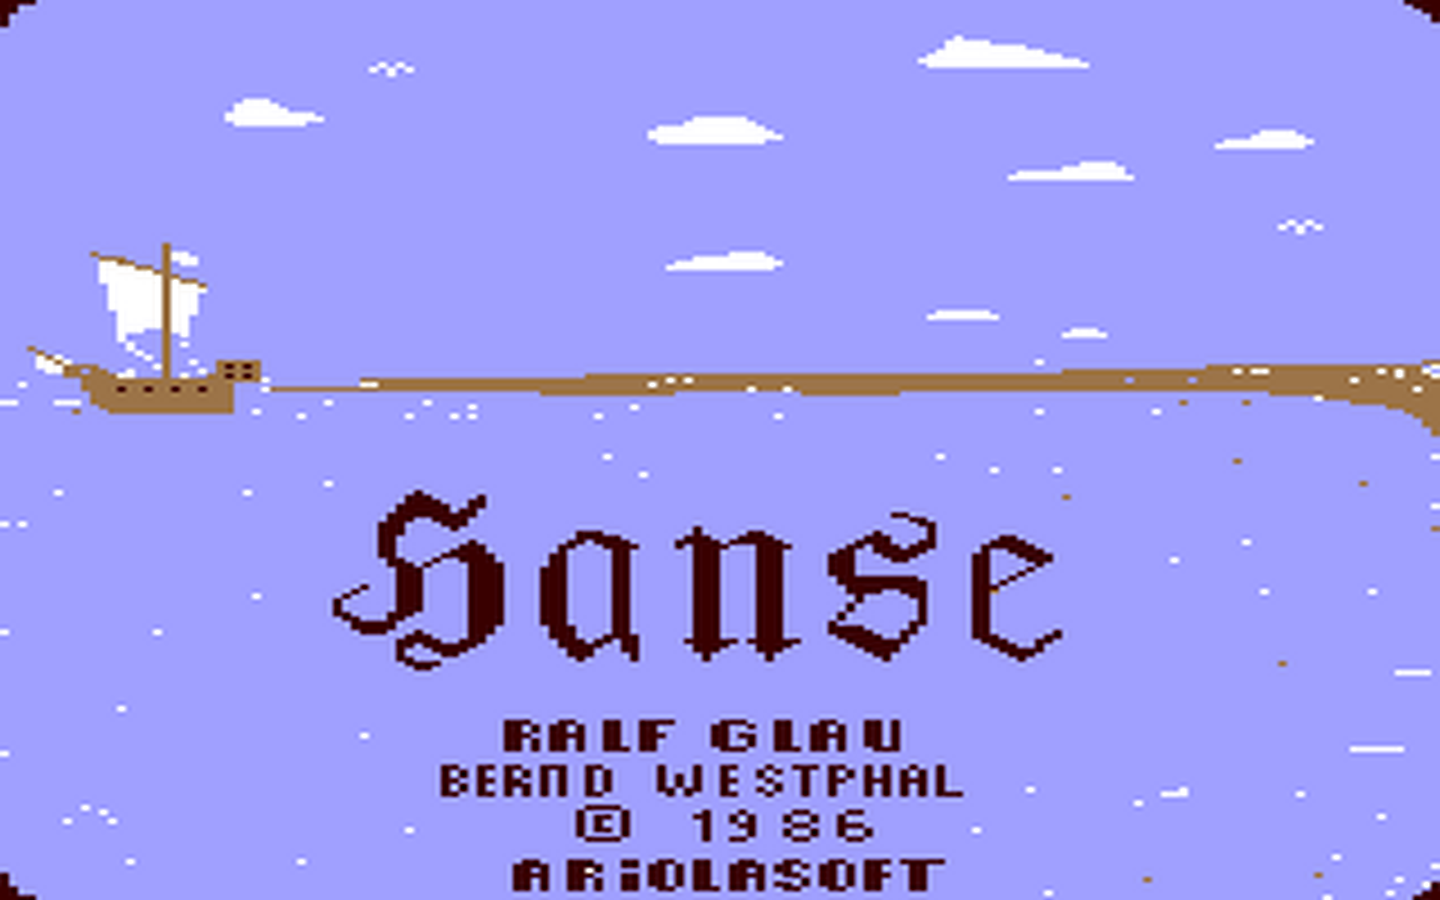 C64 GameBase Hanse Ariolasoft 1986